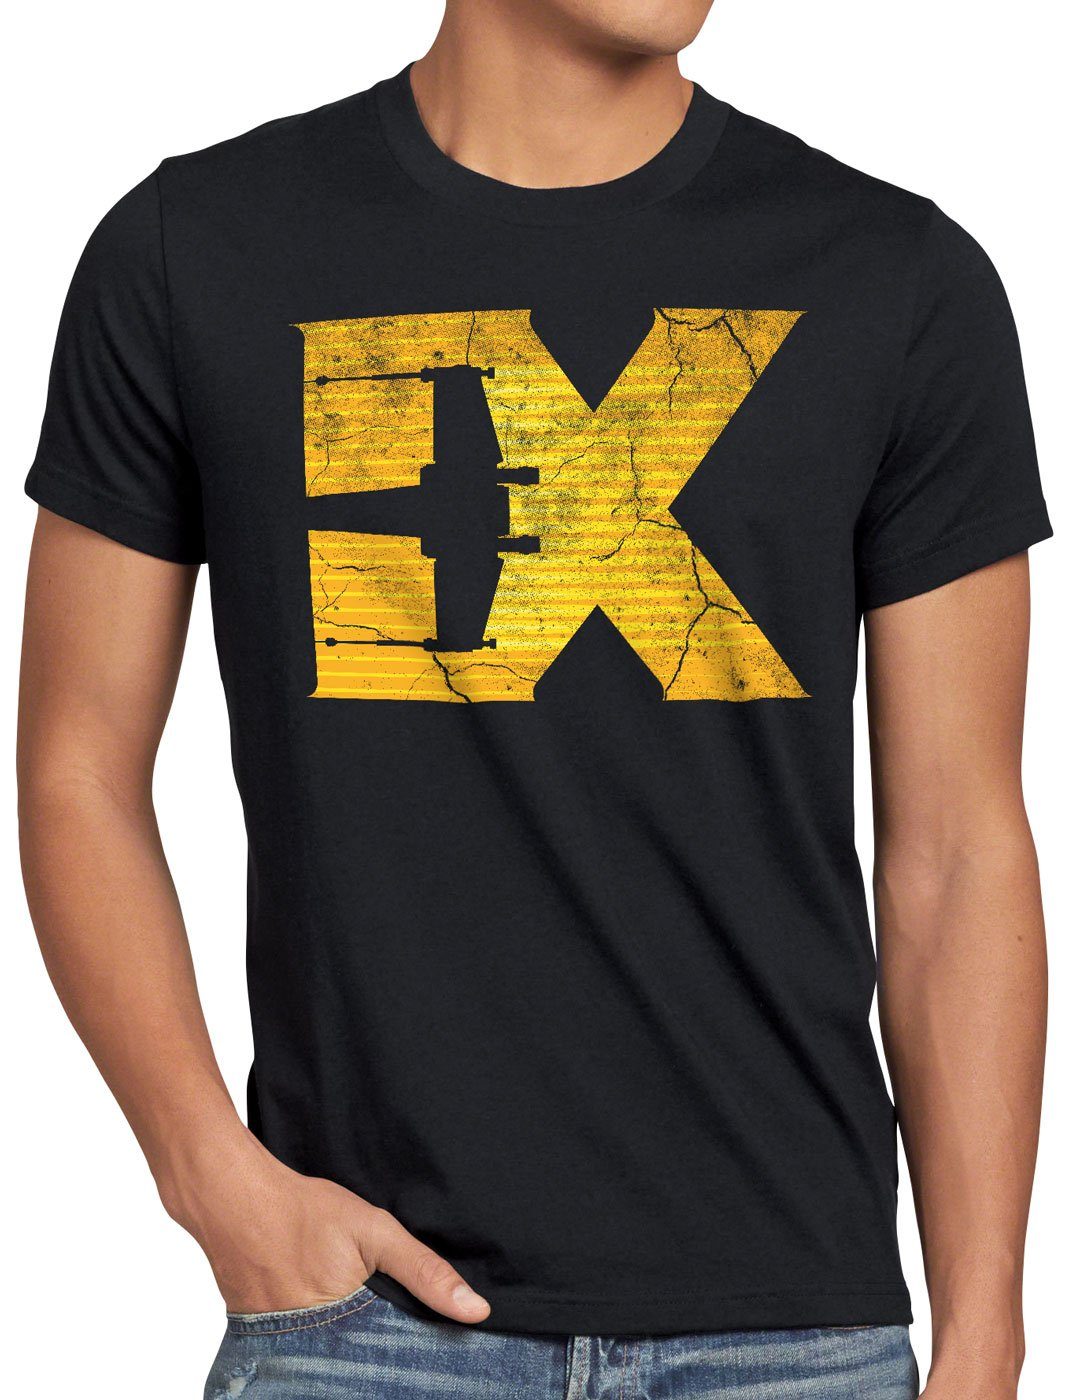 IX T-Shirt rebel 9 kinofilm xwing Print-Shirt Herren style3 Episode